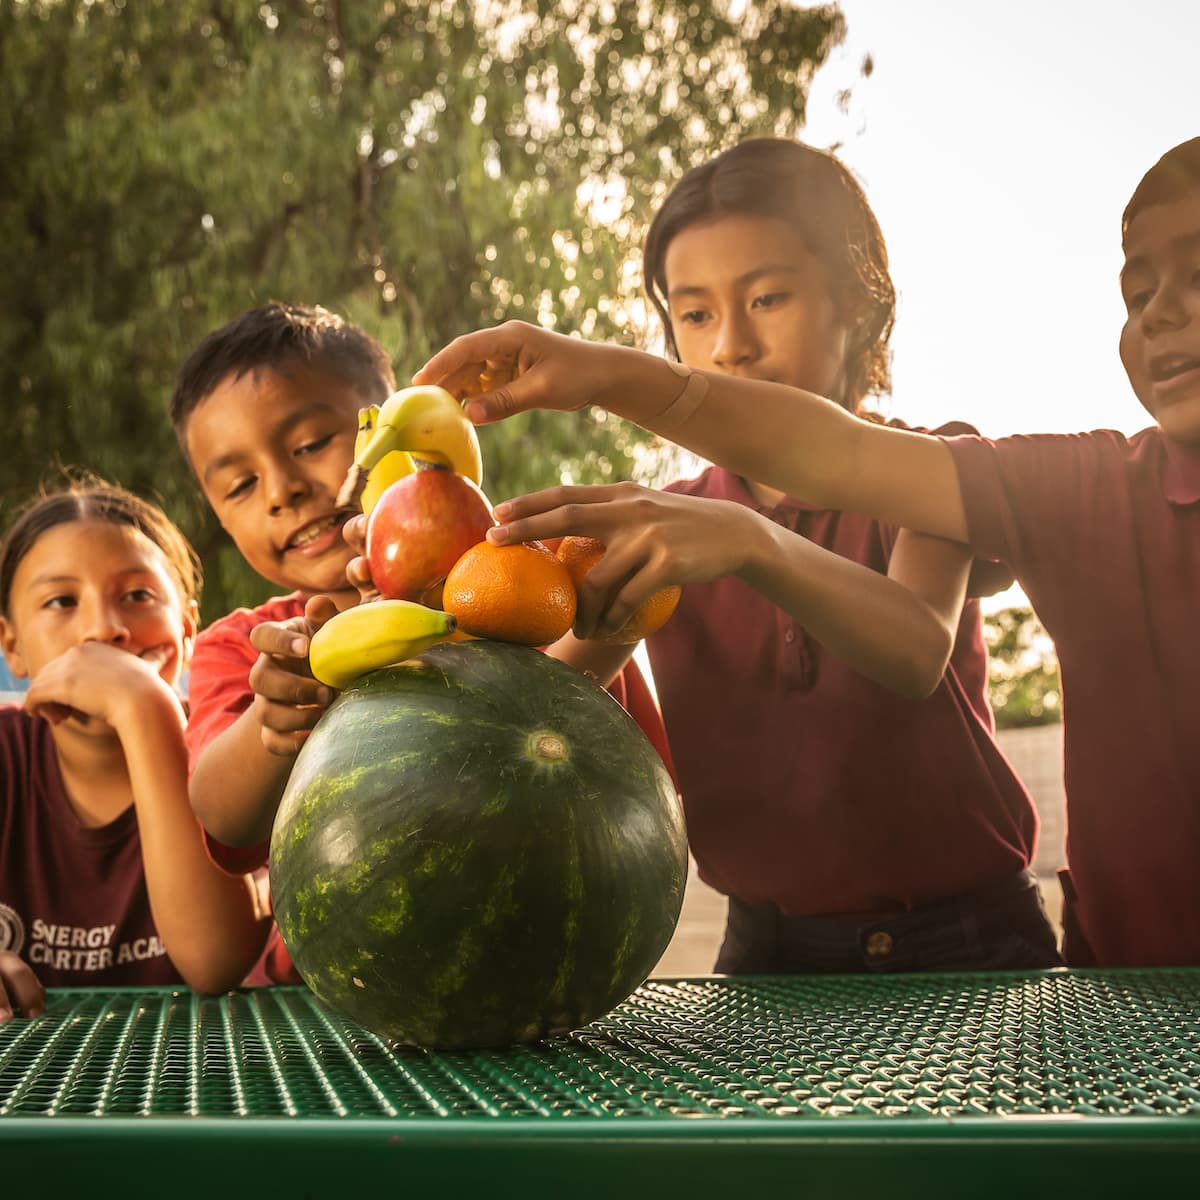 kids balancing fruit on picnic table outdoors